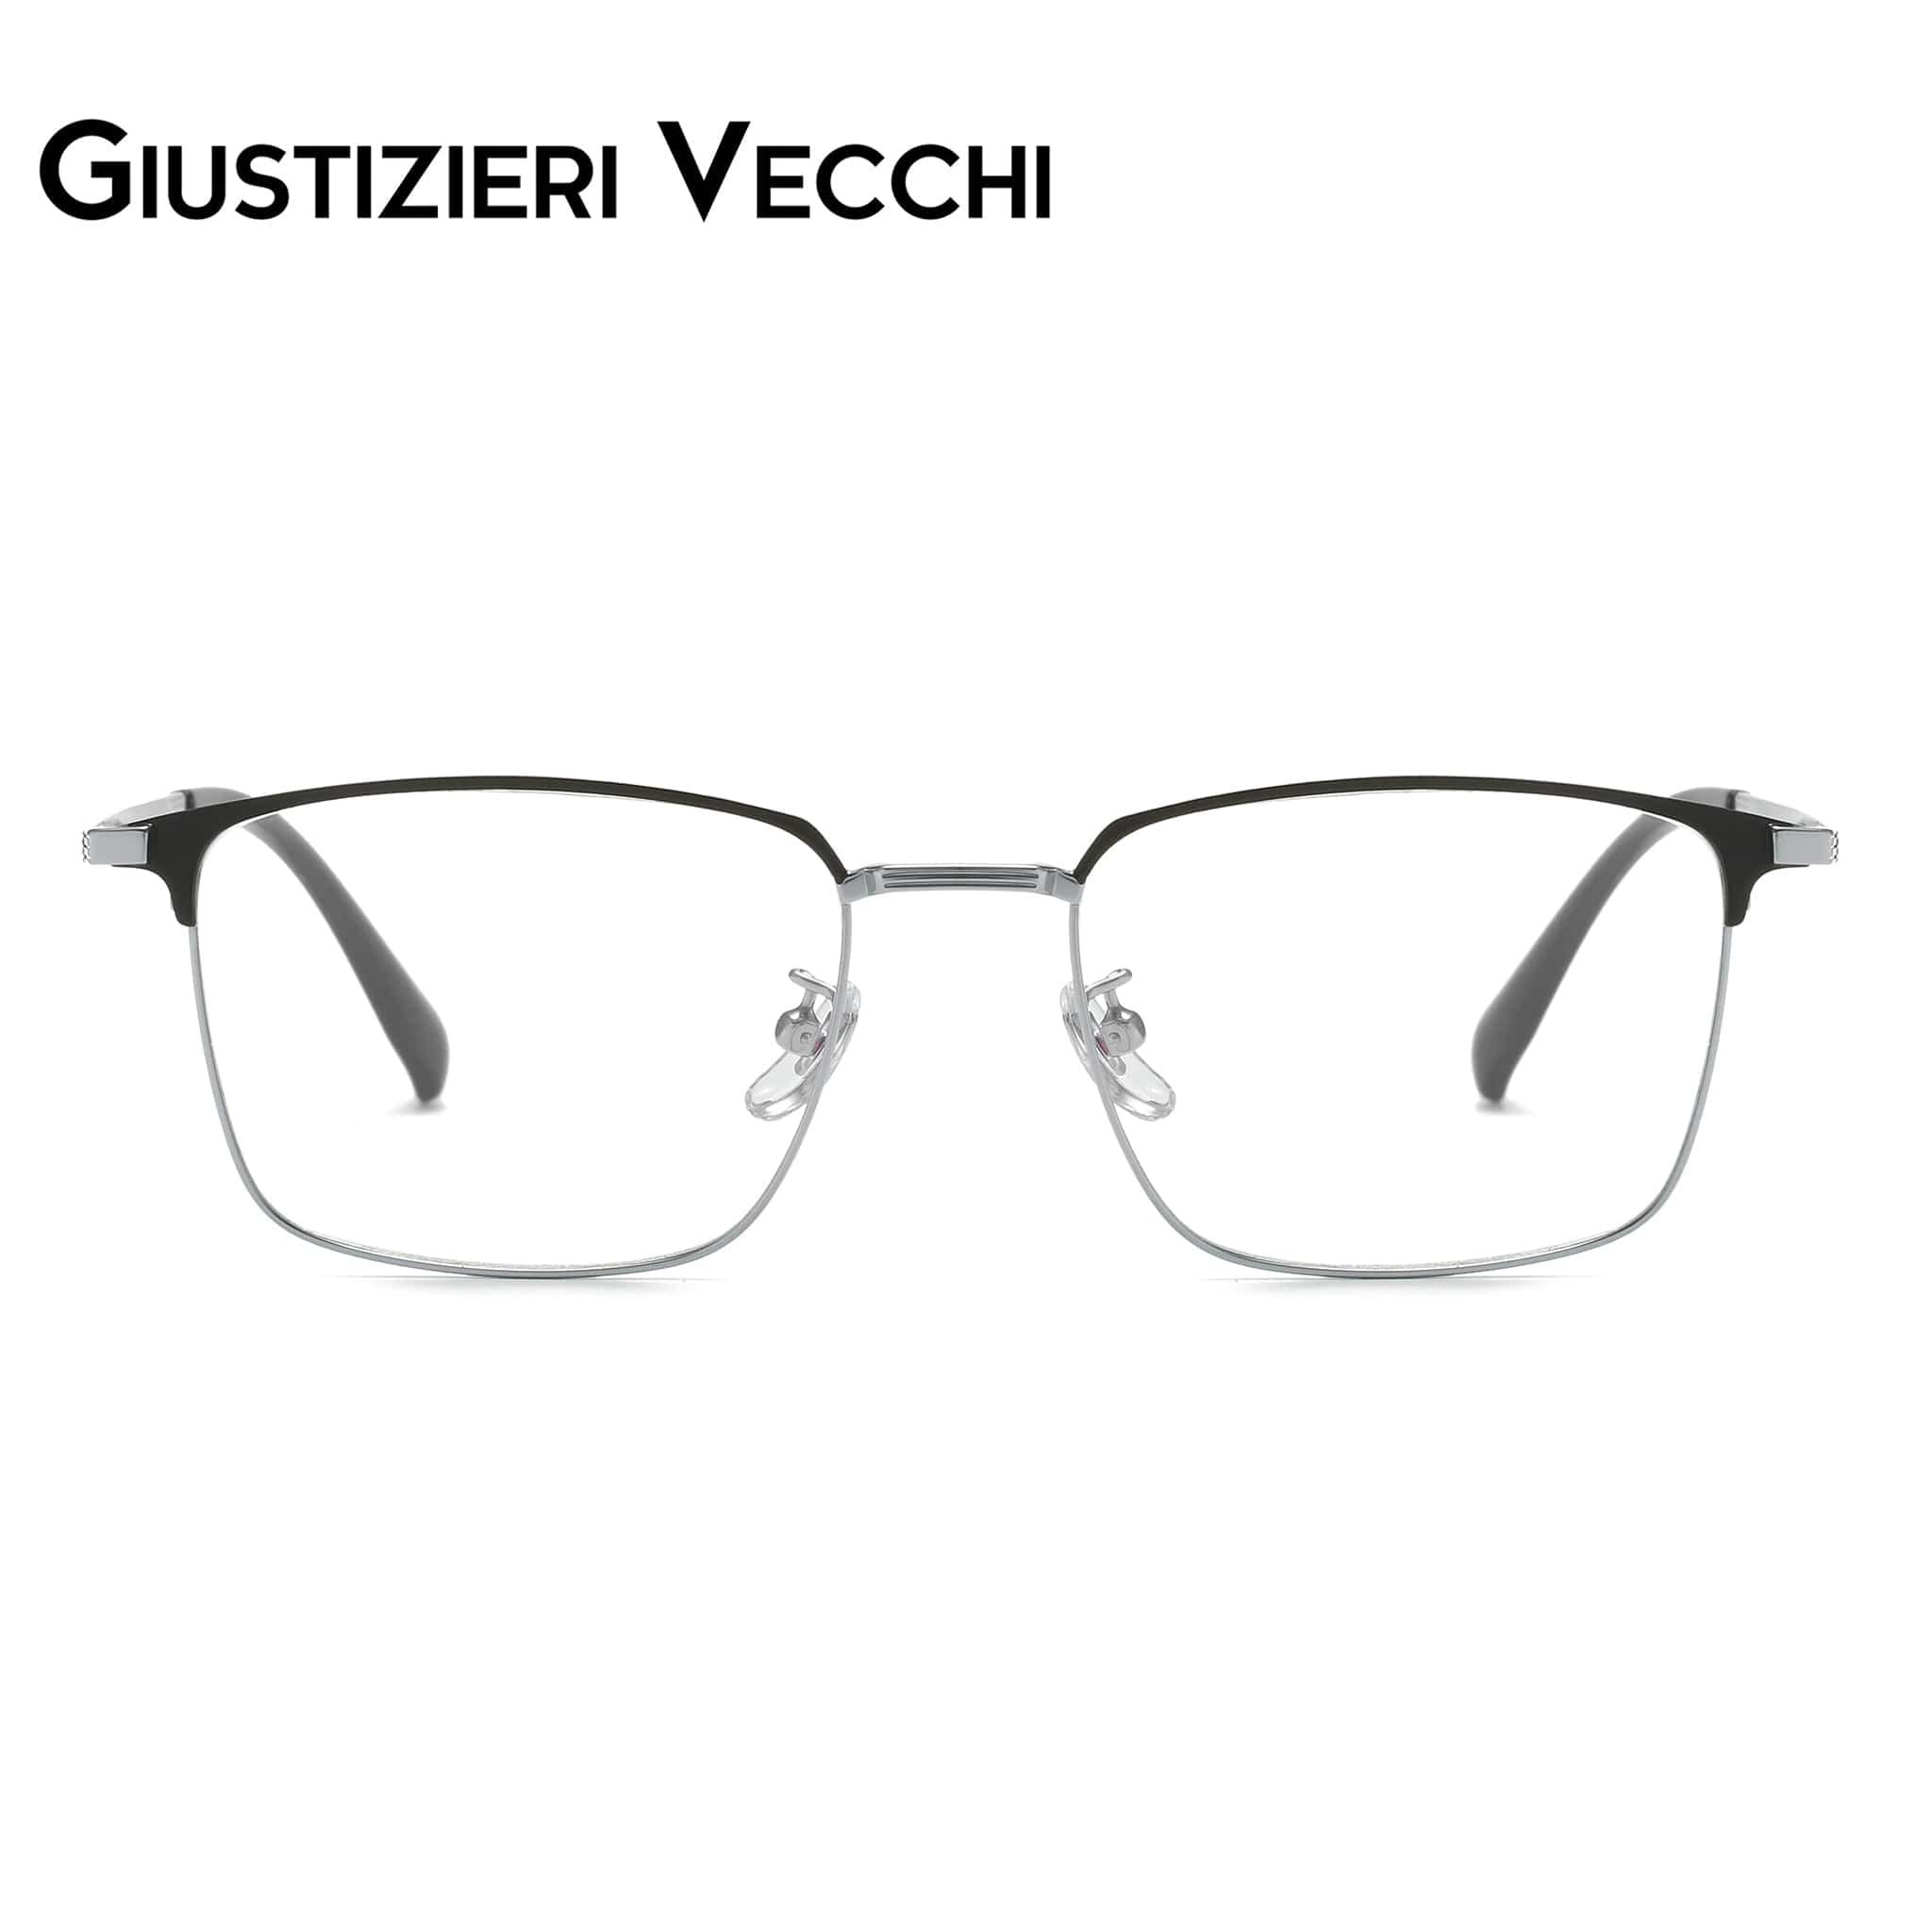 GIUSTIZIERI VECCHI Eyeglasses Medium / Black with Silver NovaBurst Duo